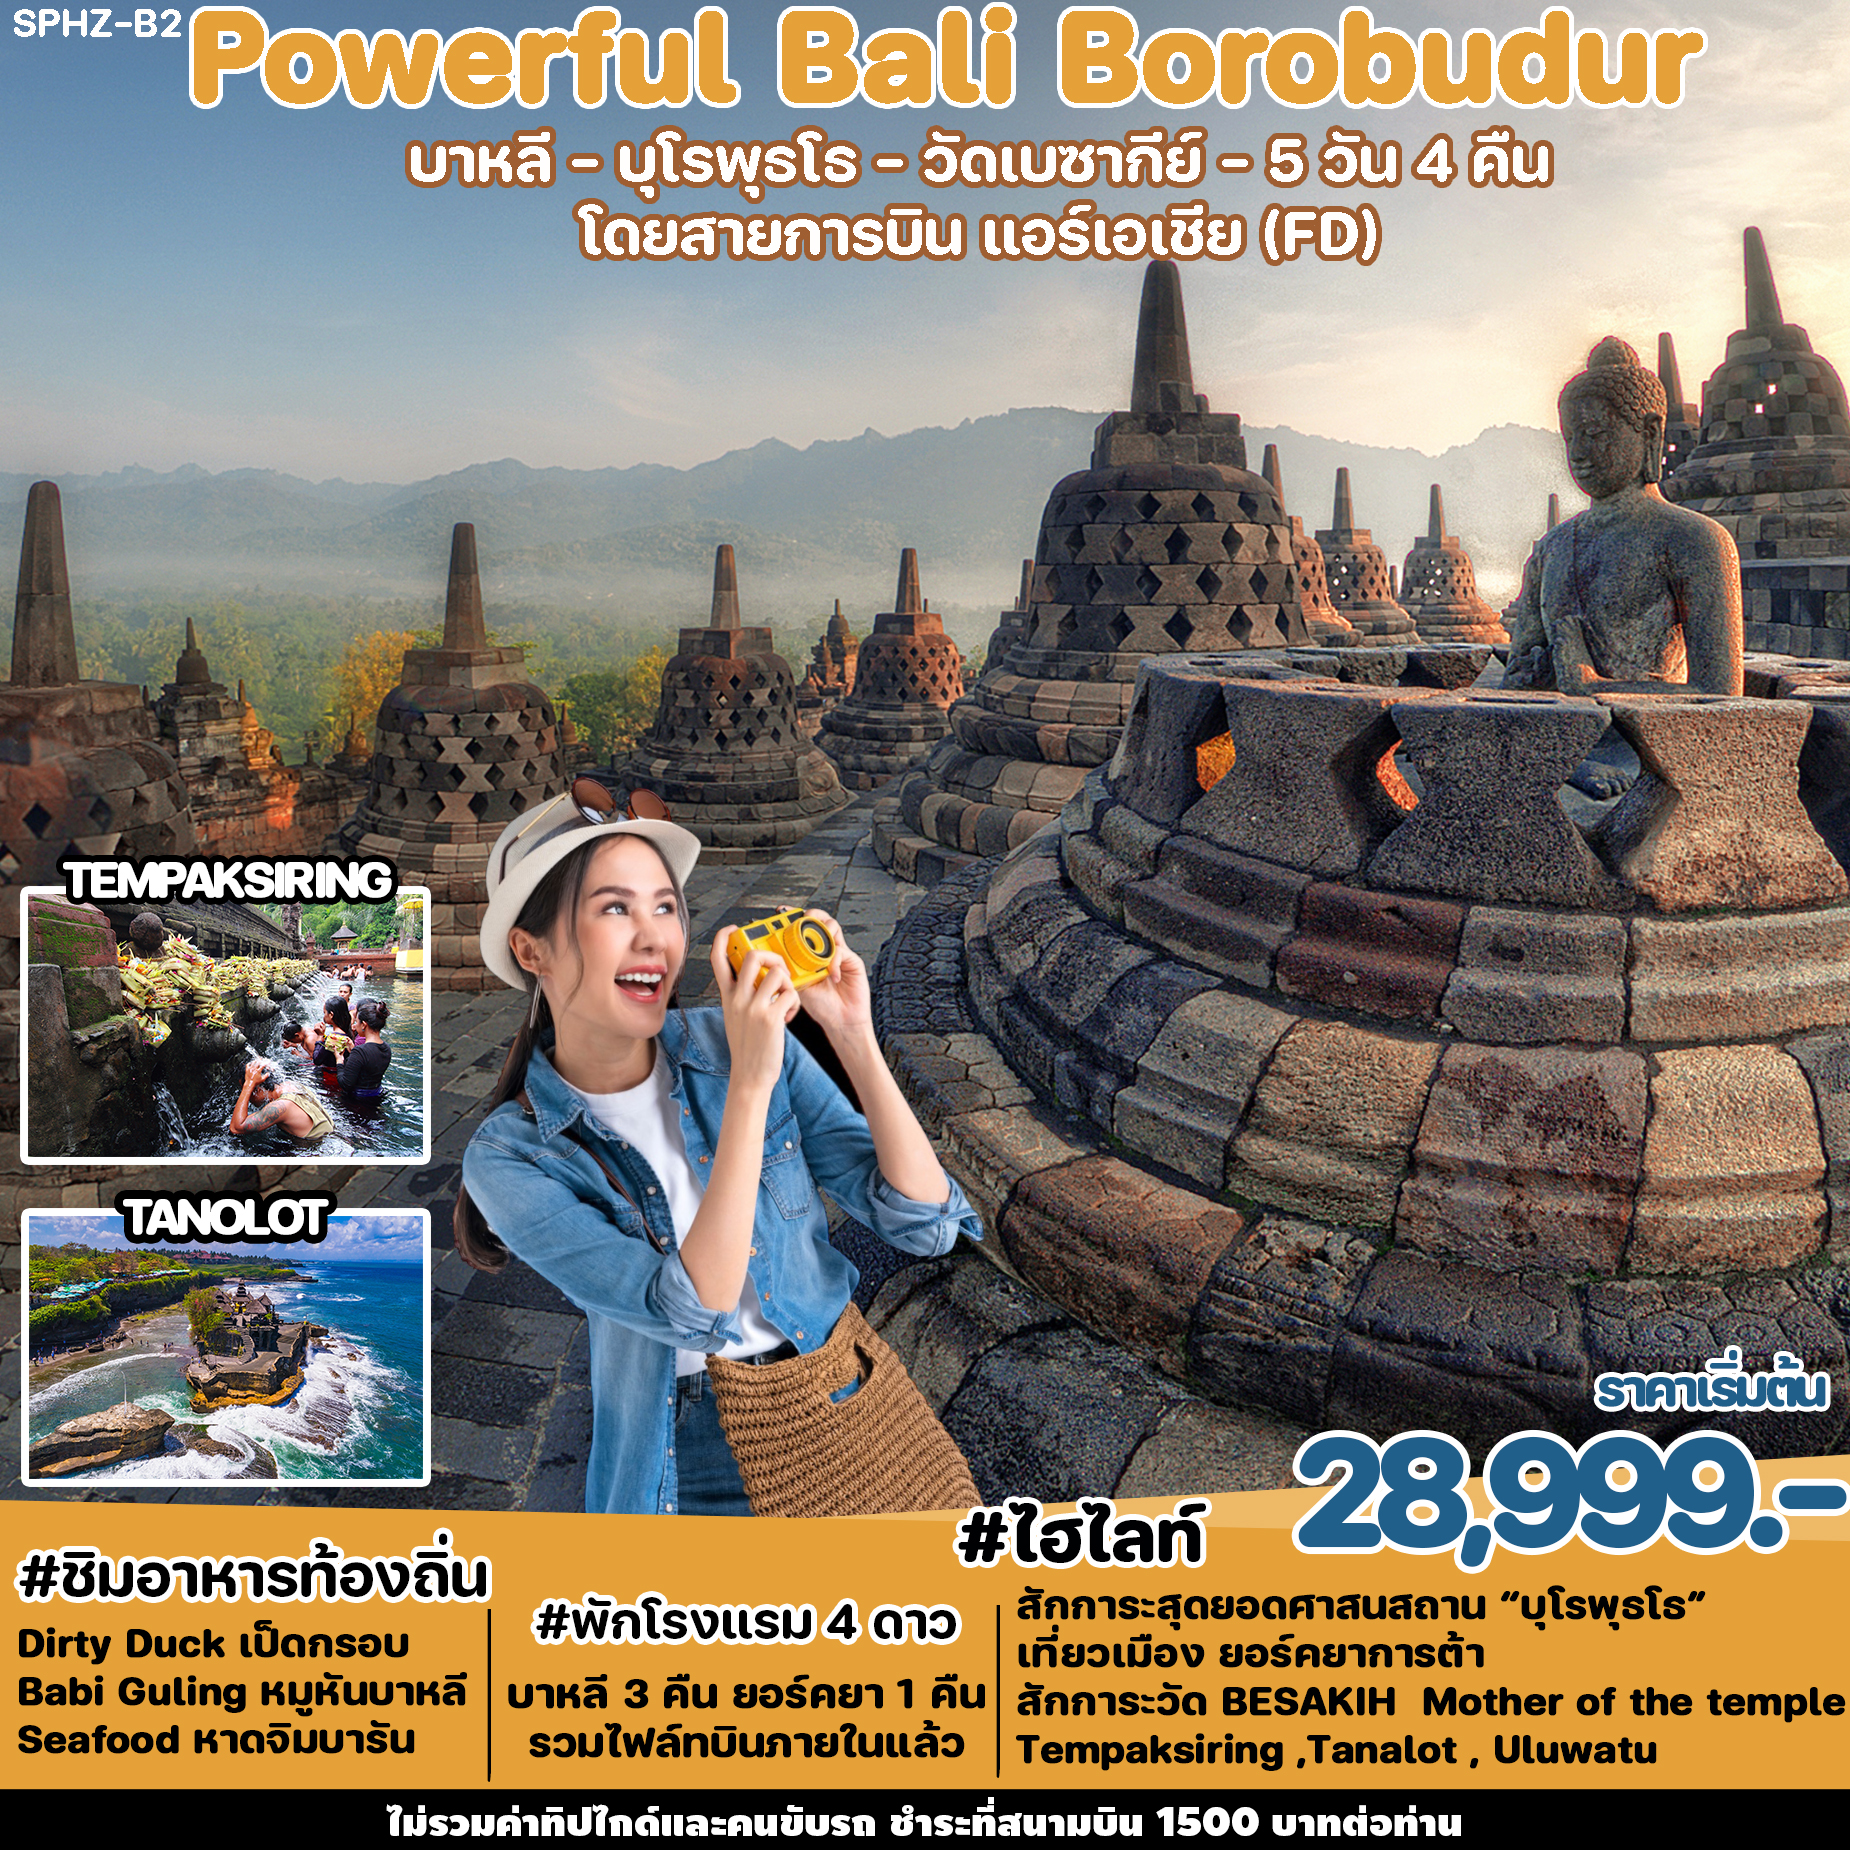 BAL02.02---SPHZ-B2-Powerful Bali-Borobudur 5 D (FD) DEC 23 - OCT 24